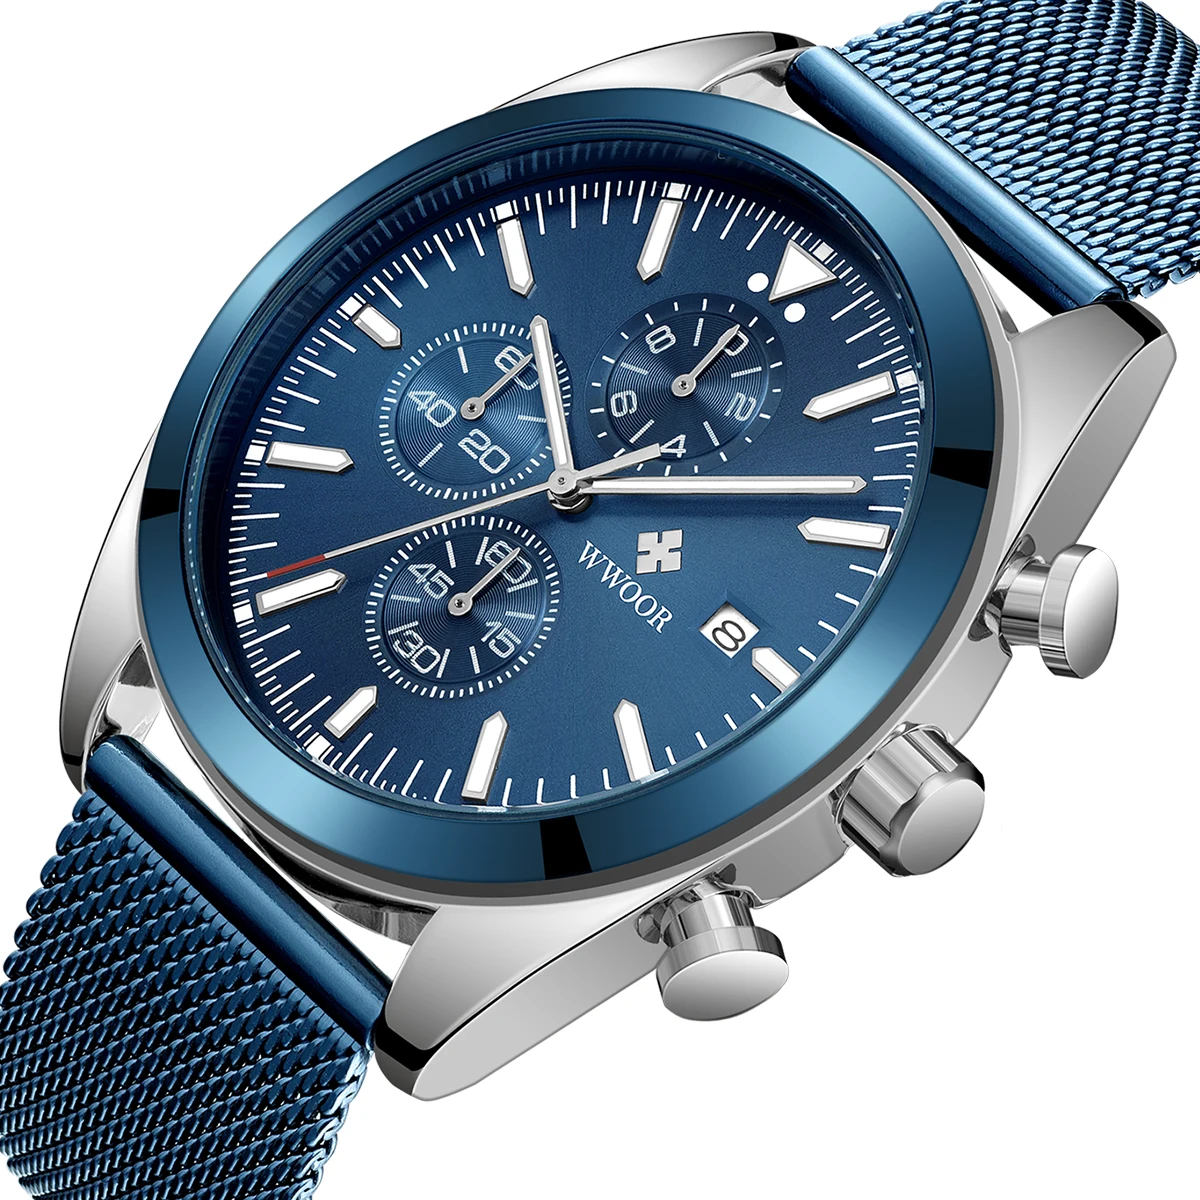 

2021 New WWOOR 8838W Day Date Chronograph Watch Men Stainless Steel Bands Quartz Watches Brand Waterproof Luminous Wristwatch